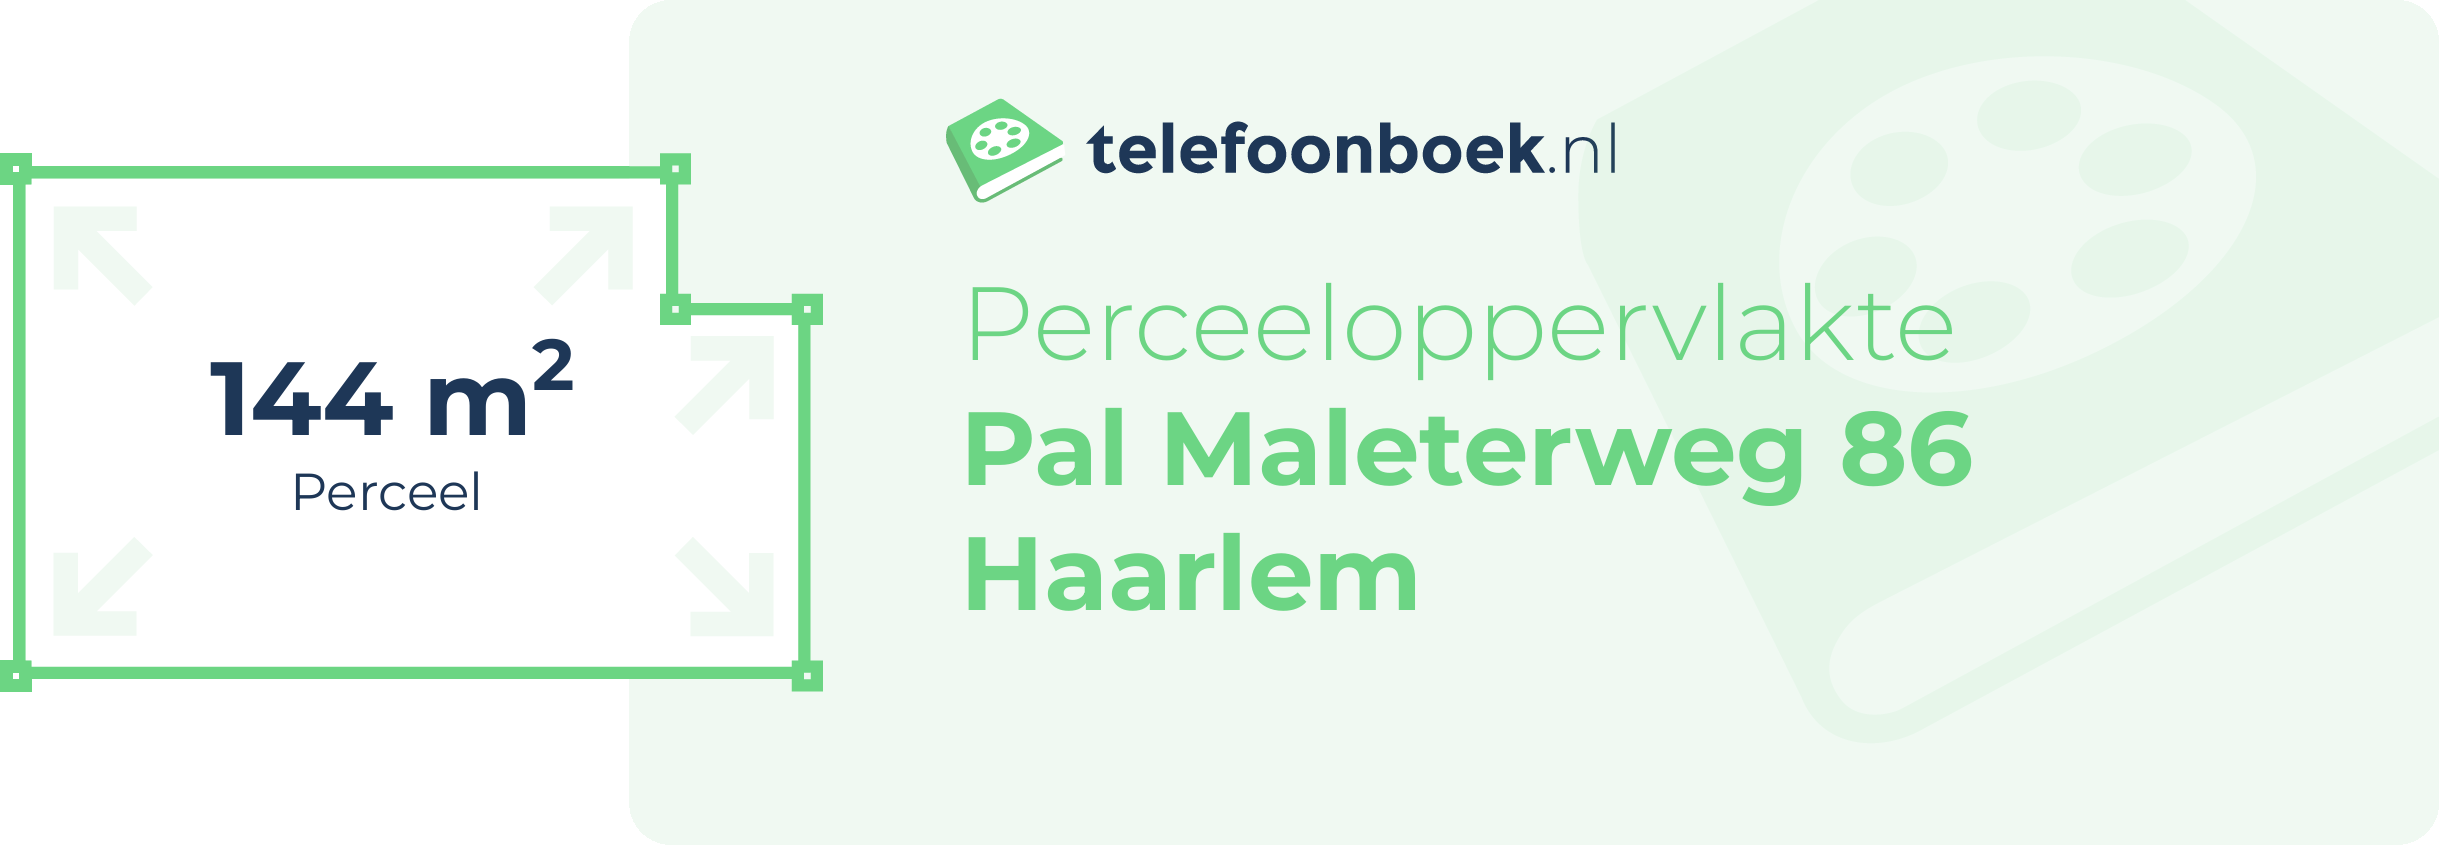 Perceeloppervlakte Pal Maleterweg 86 Haarlem